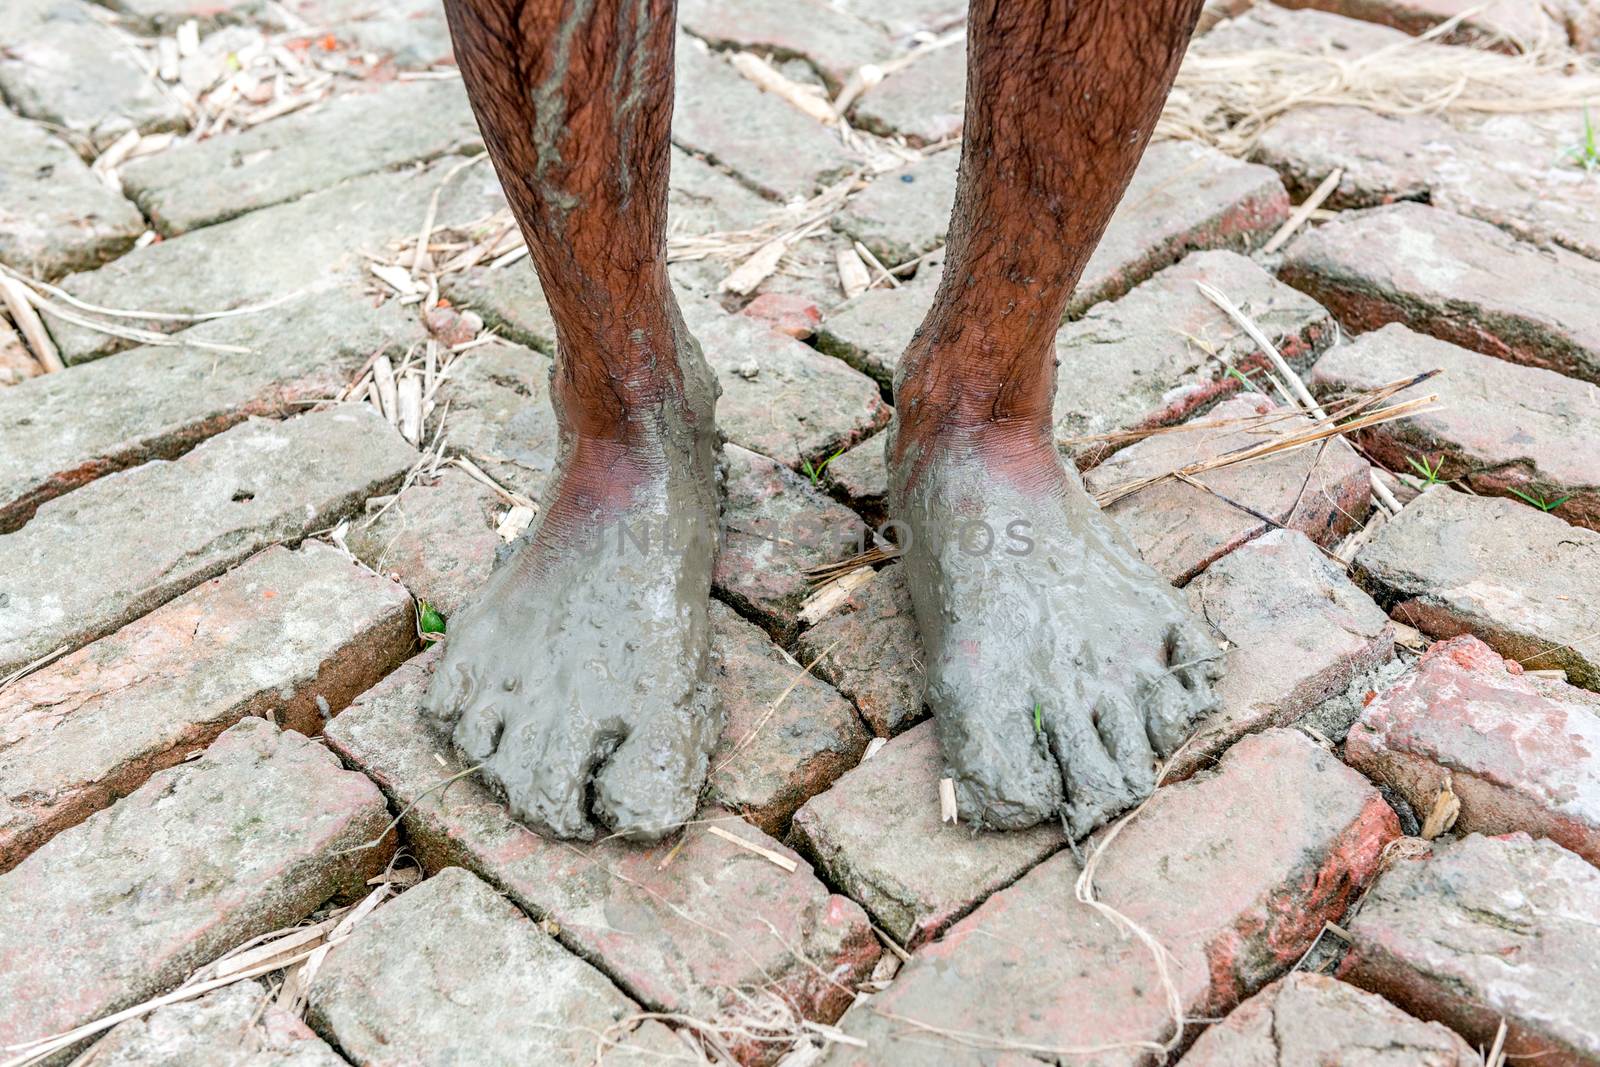 Gopalgonj, Bangladesh - September 20, 2016: Legs of a labor with muddy at Gopalgonj, Bangladesh